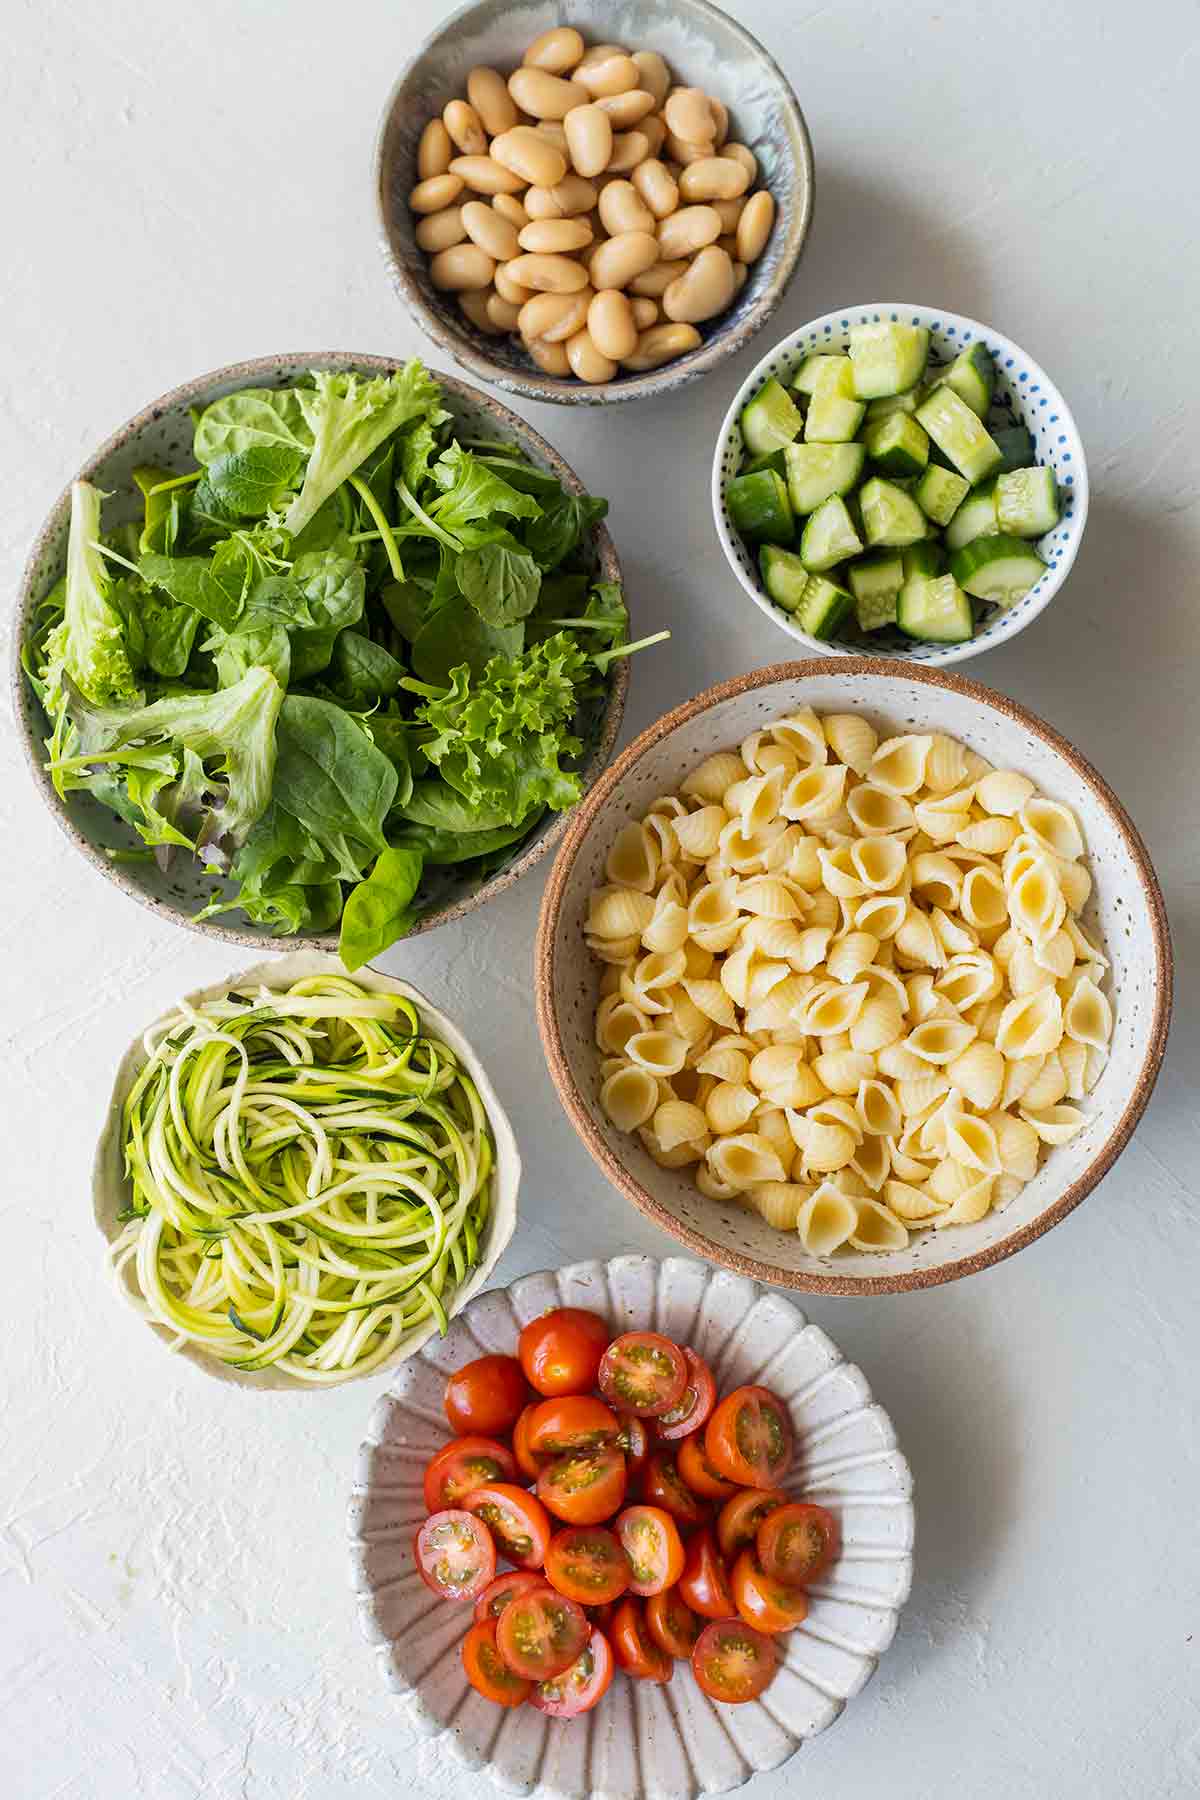 Flatlay of salad ingredients for Vegan Layered Pasta Salad.